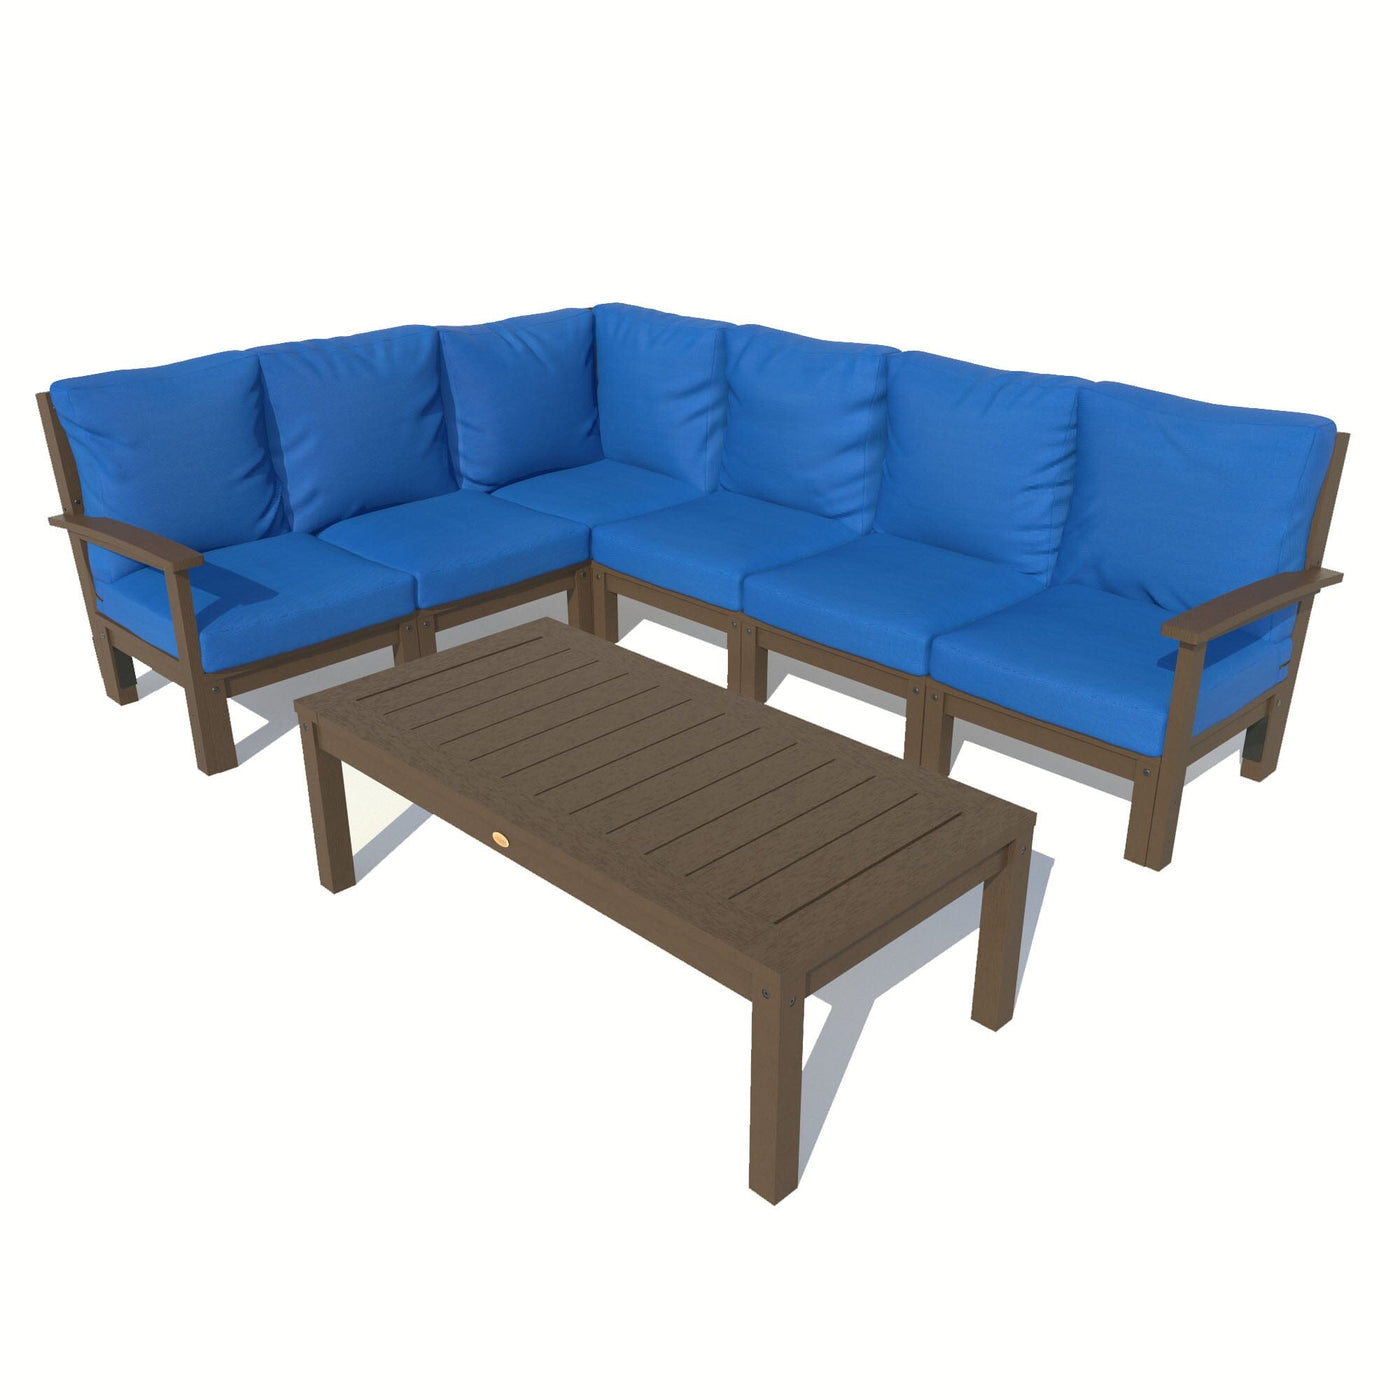 Bespoke Deep Seating: 7 Piece Sectional Sofa Set with Conversation Table Deep Seating Highwood USA Cobalt Blue Weathered Acorn 